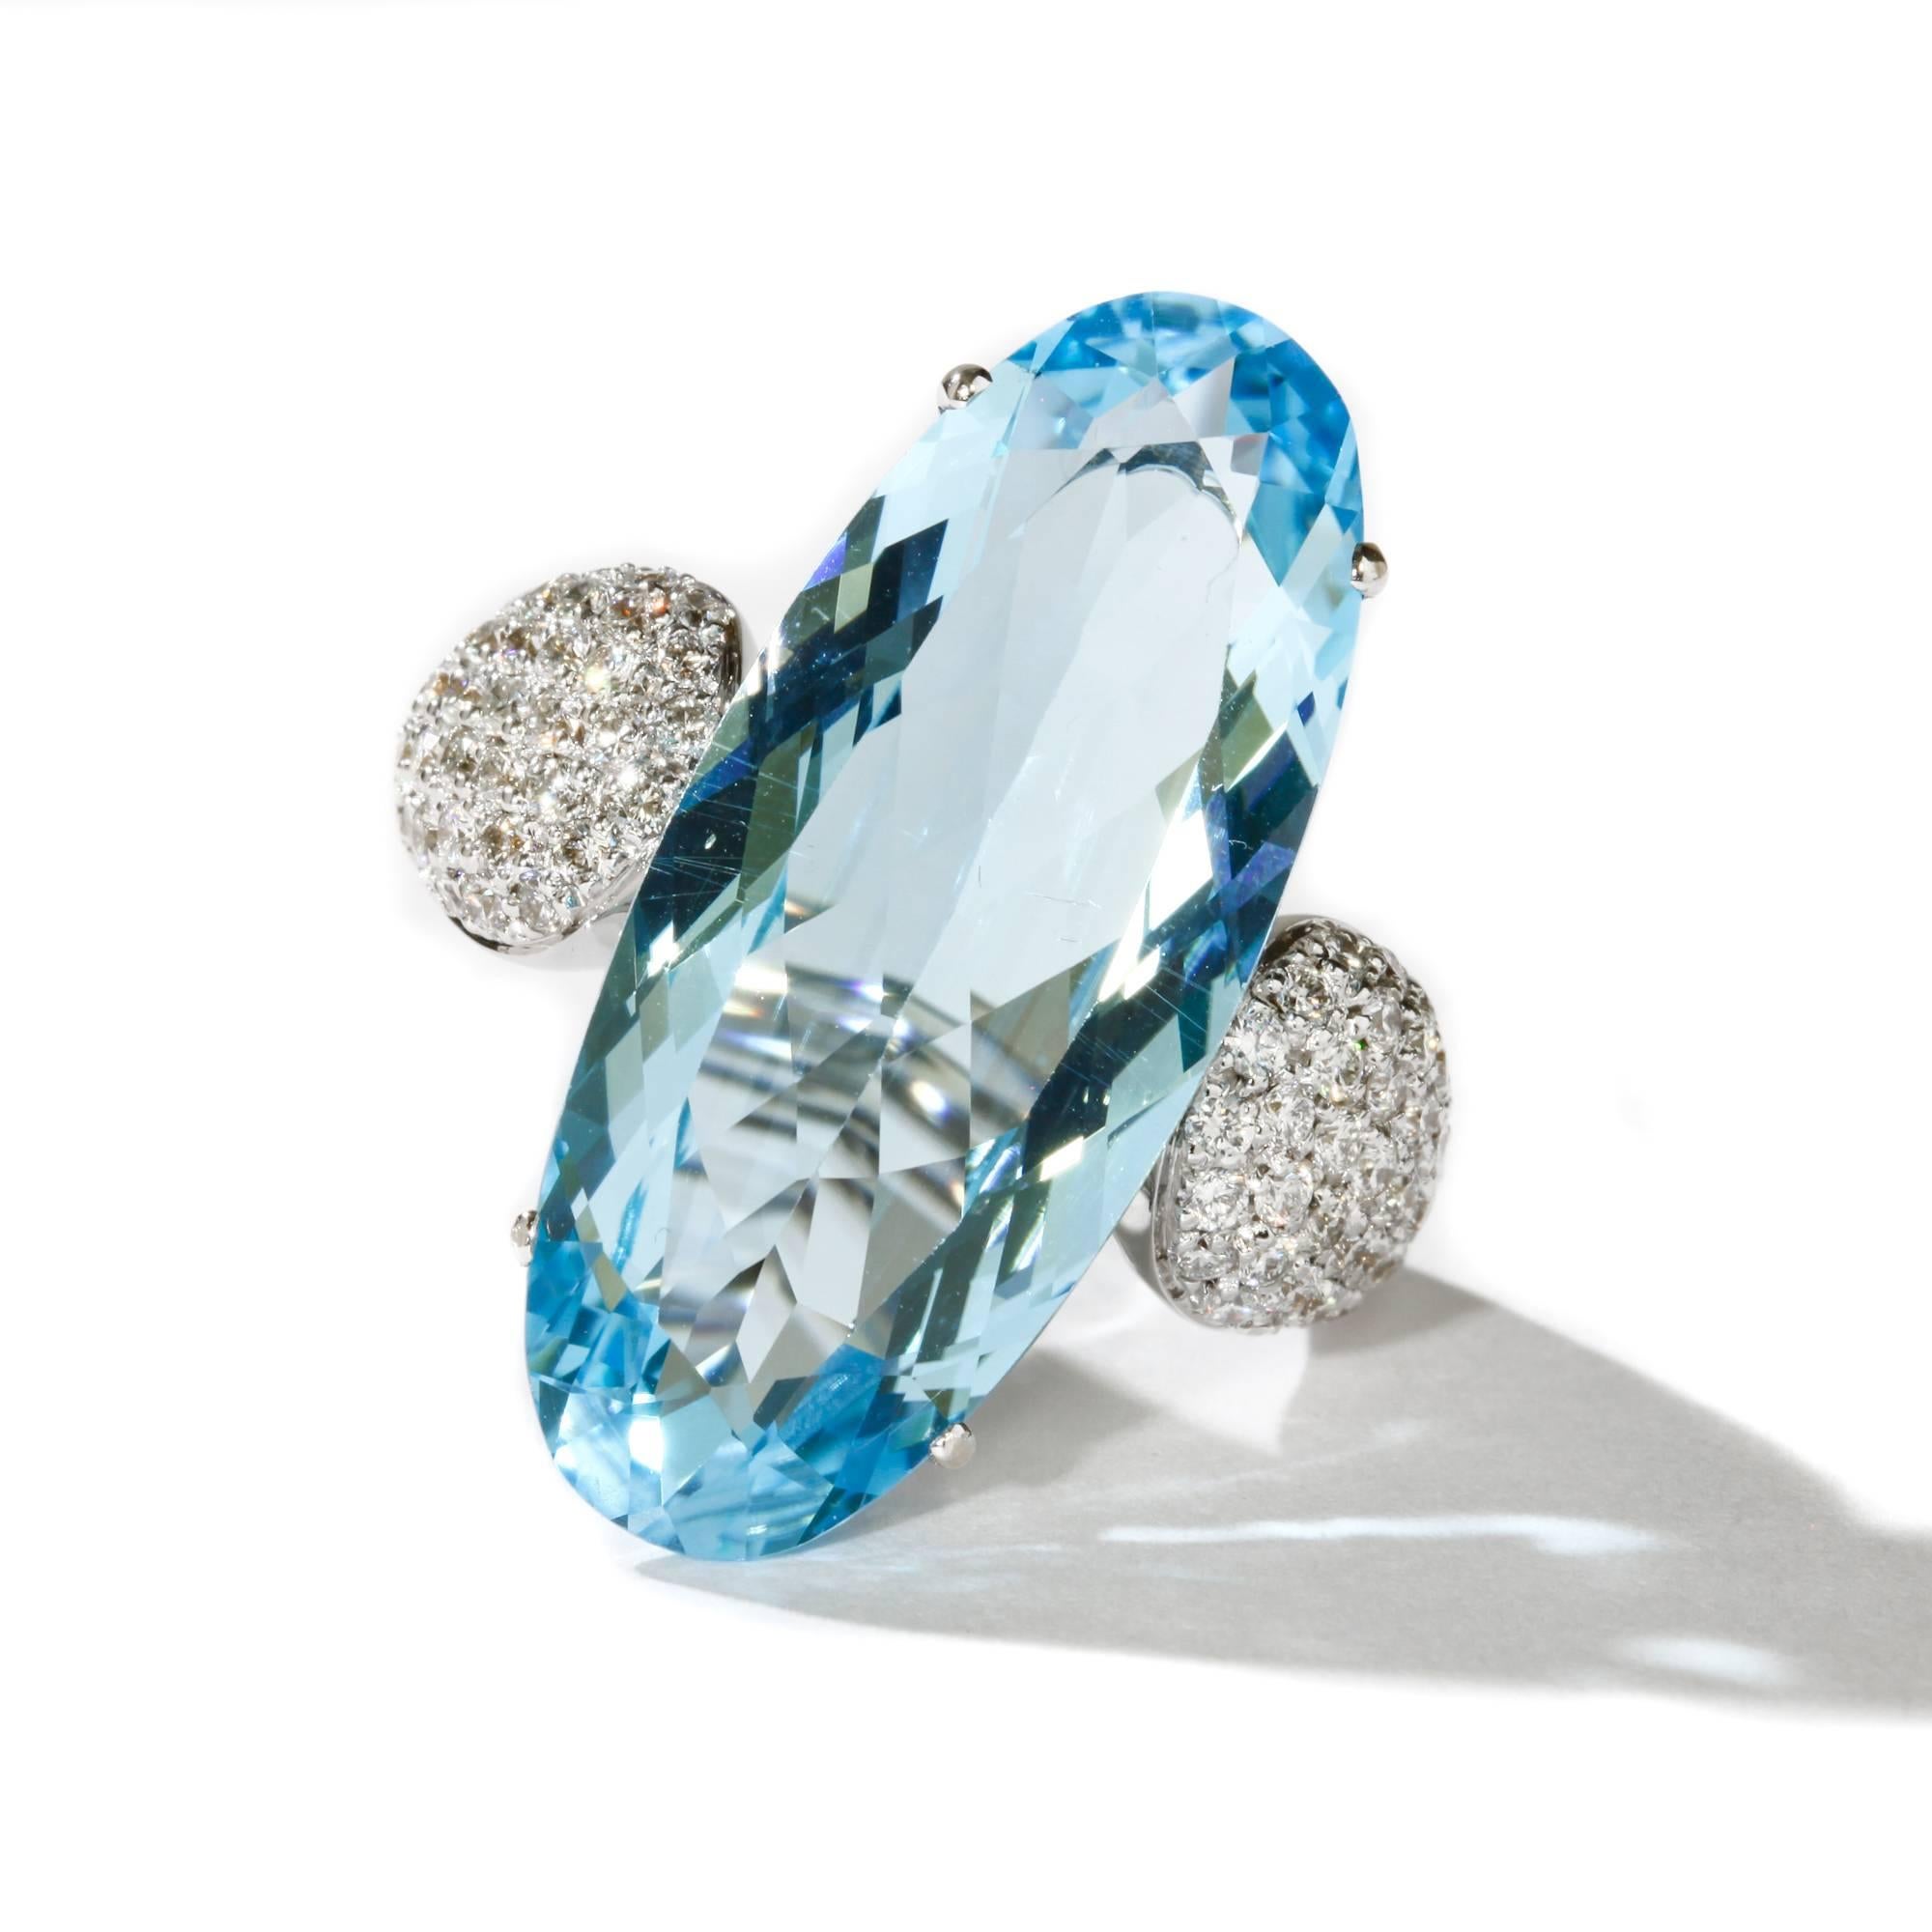 A & Furst Fleur-de-Lys Cocktail Ring Blue Topaz Diamonds 18 Karat White Gold In New Condition For Sale In Houston, TX